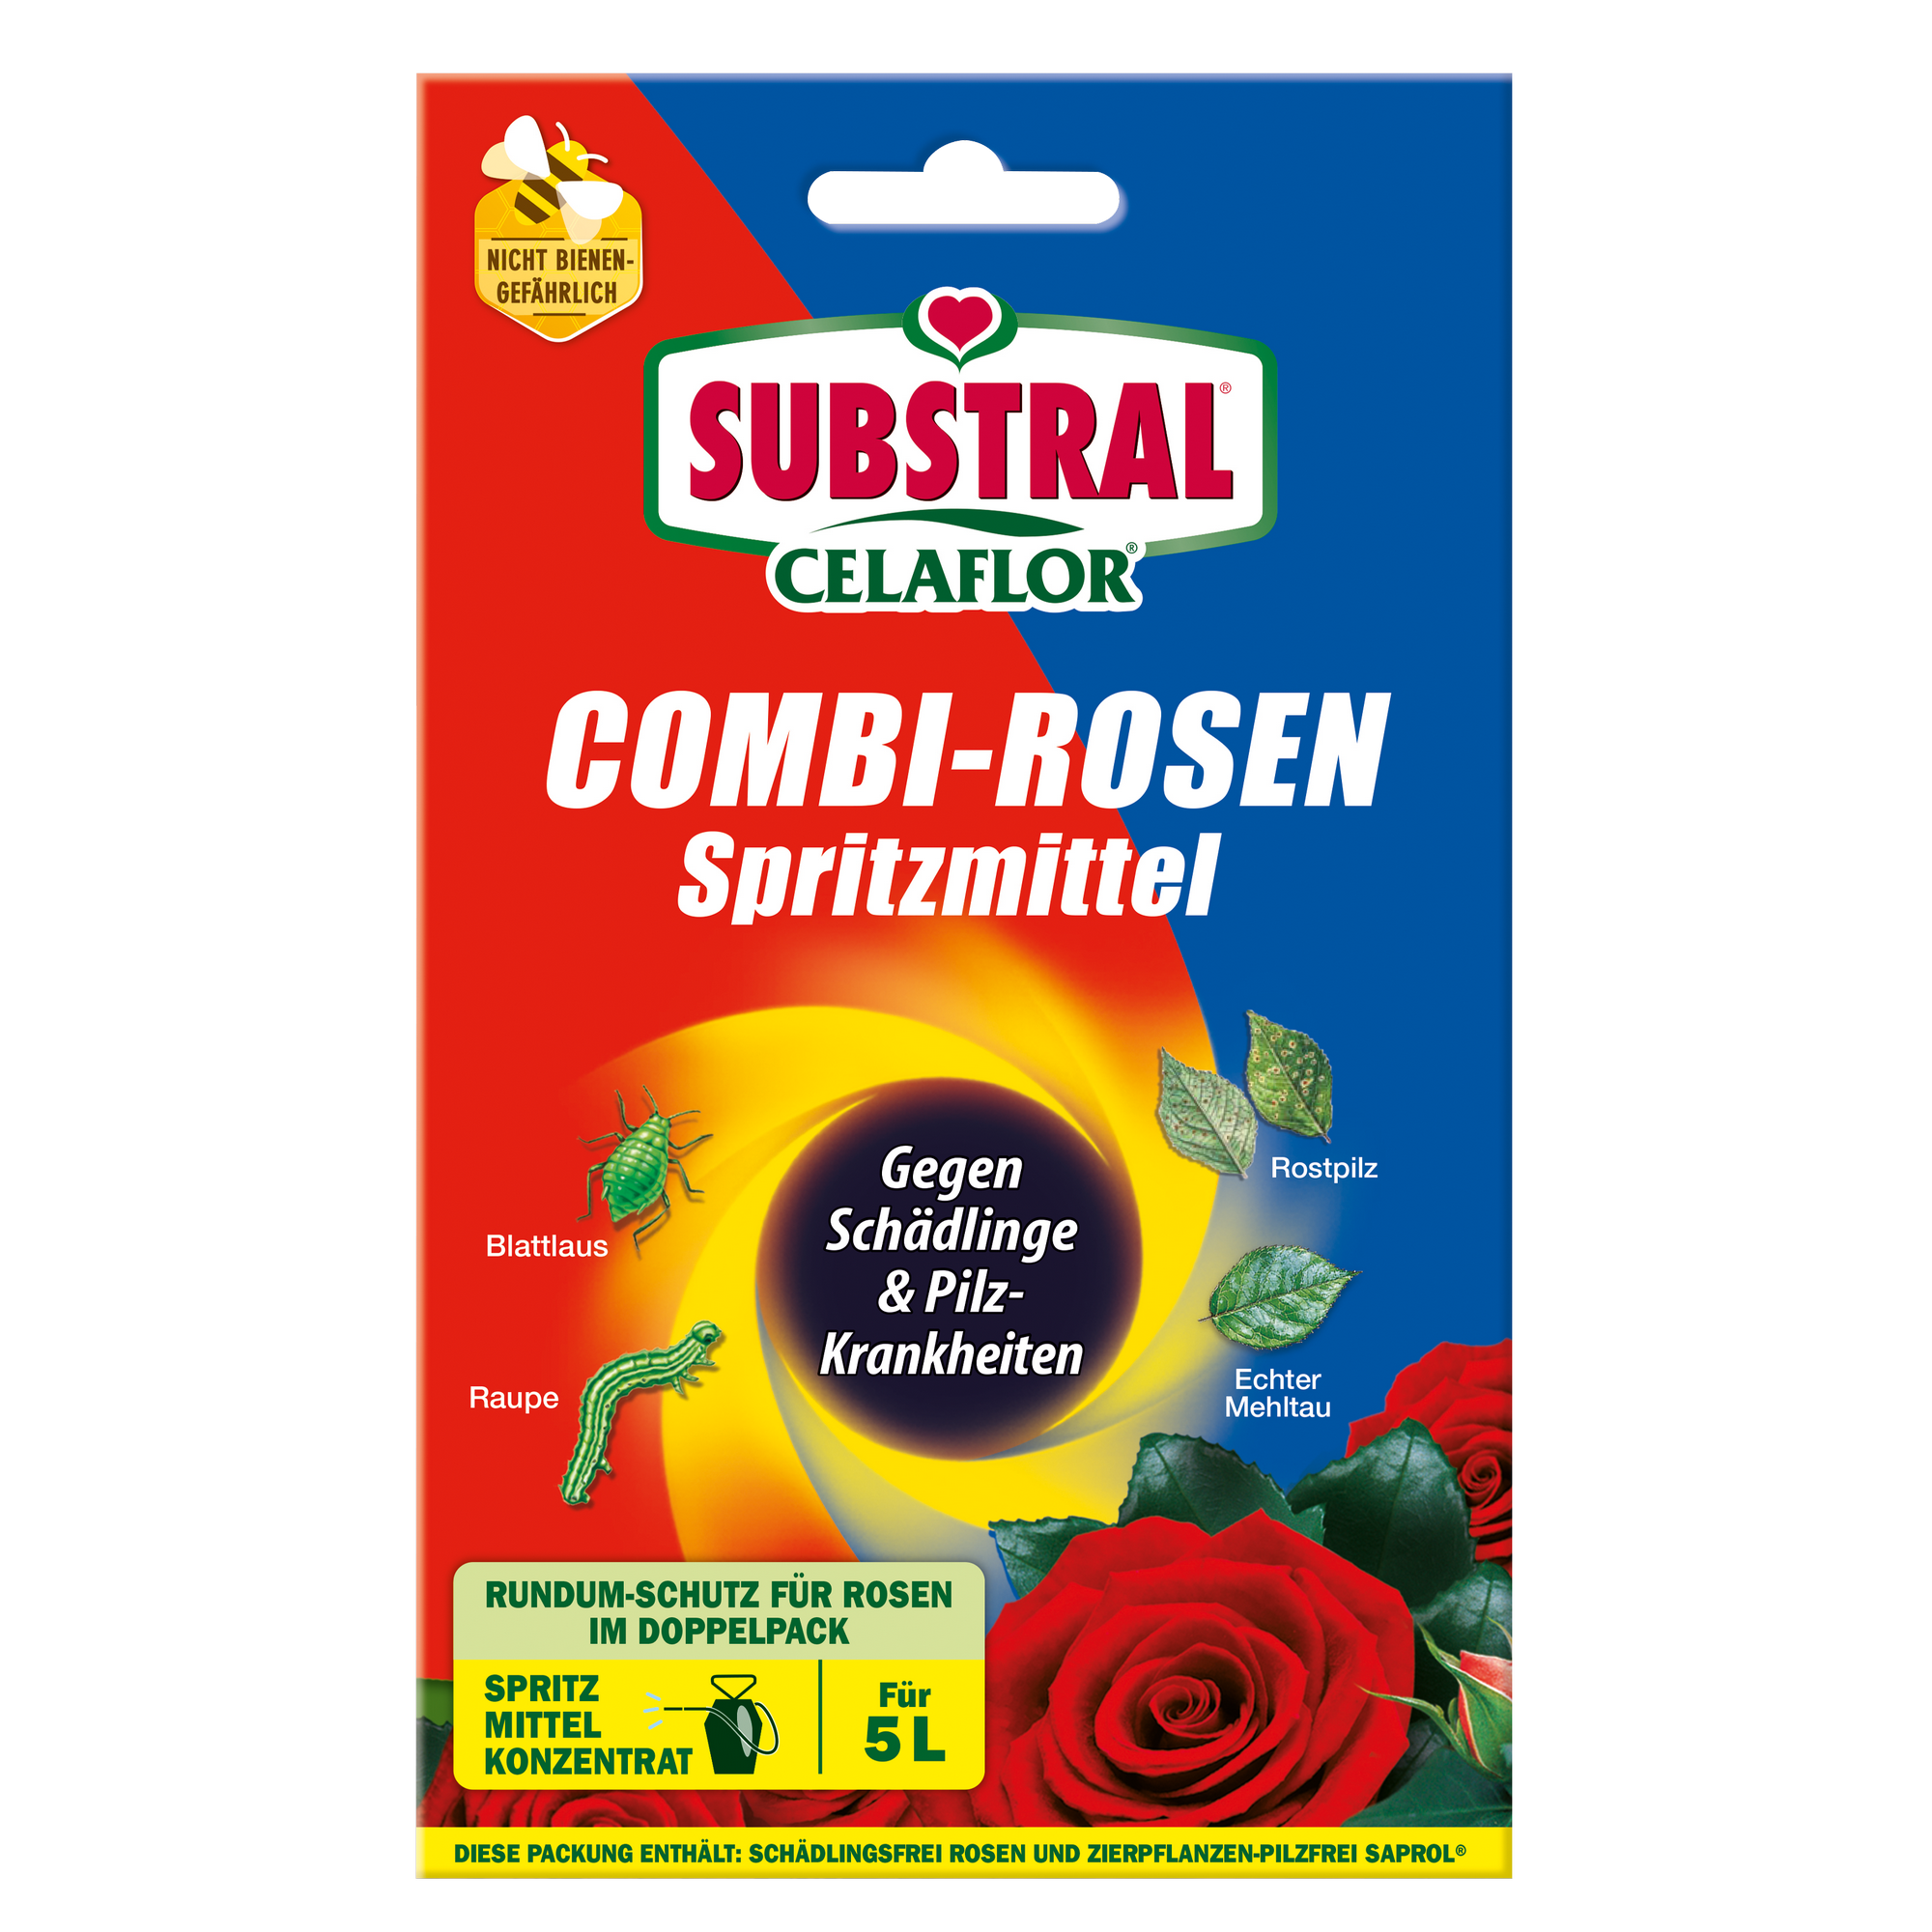 Combi-Rosen Spritzmittel 1 x 7,5 ml + 1 x 4 ml + product picture